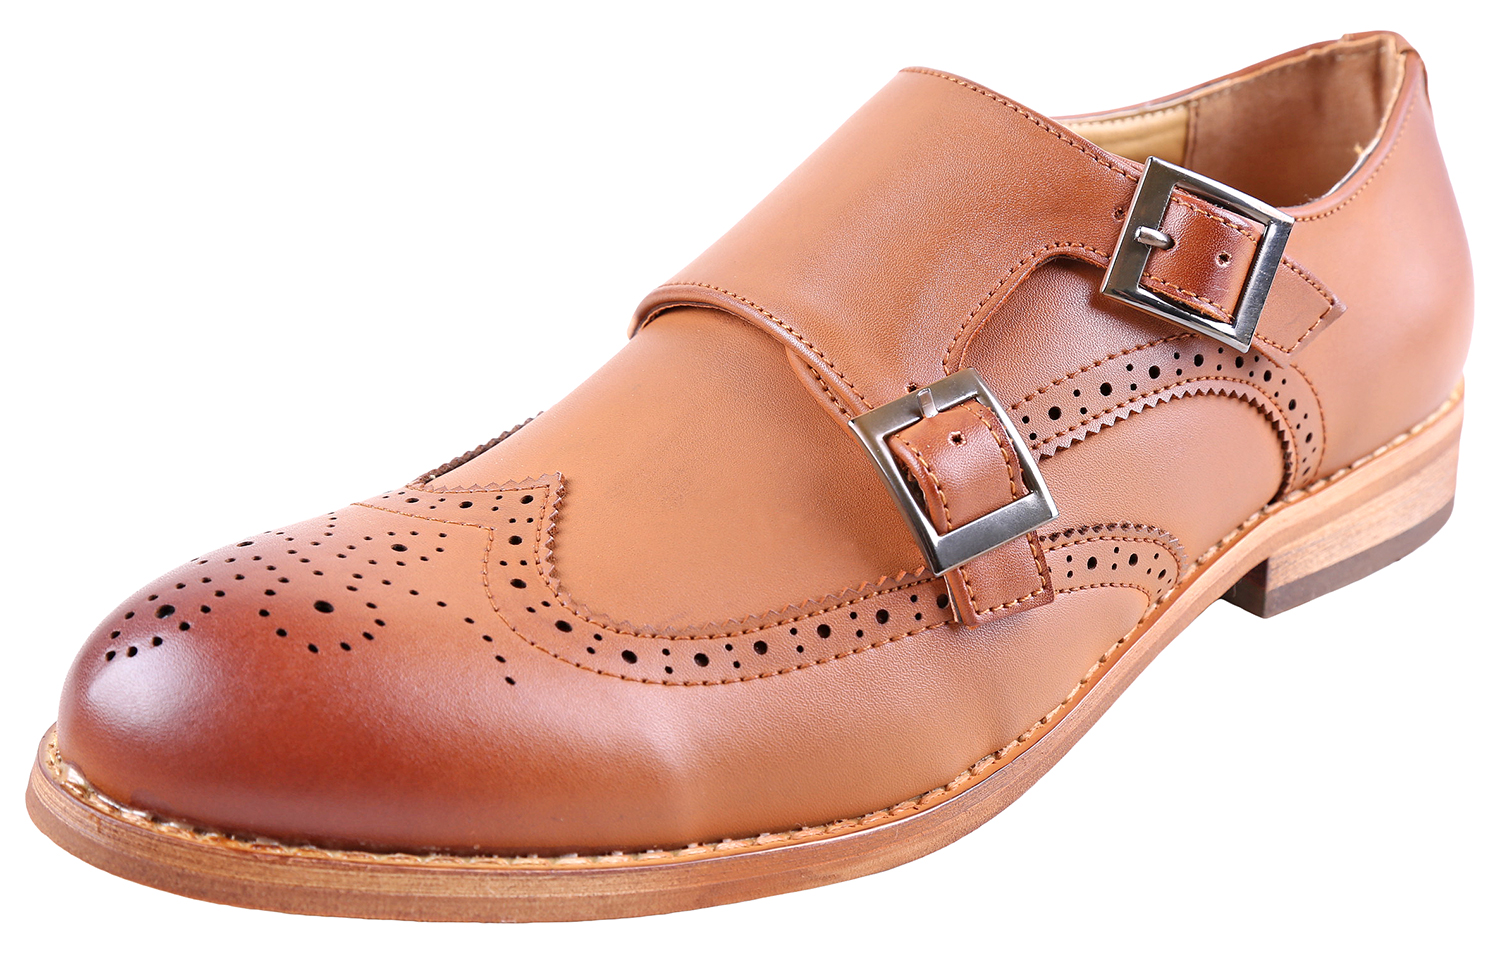 Urban Fox Allen Men's Dress Shoe | Double Monk Strap | Brogue | Wingtip Shoes for Men | Light Brown 9 M US - image 1 of 7